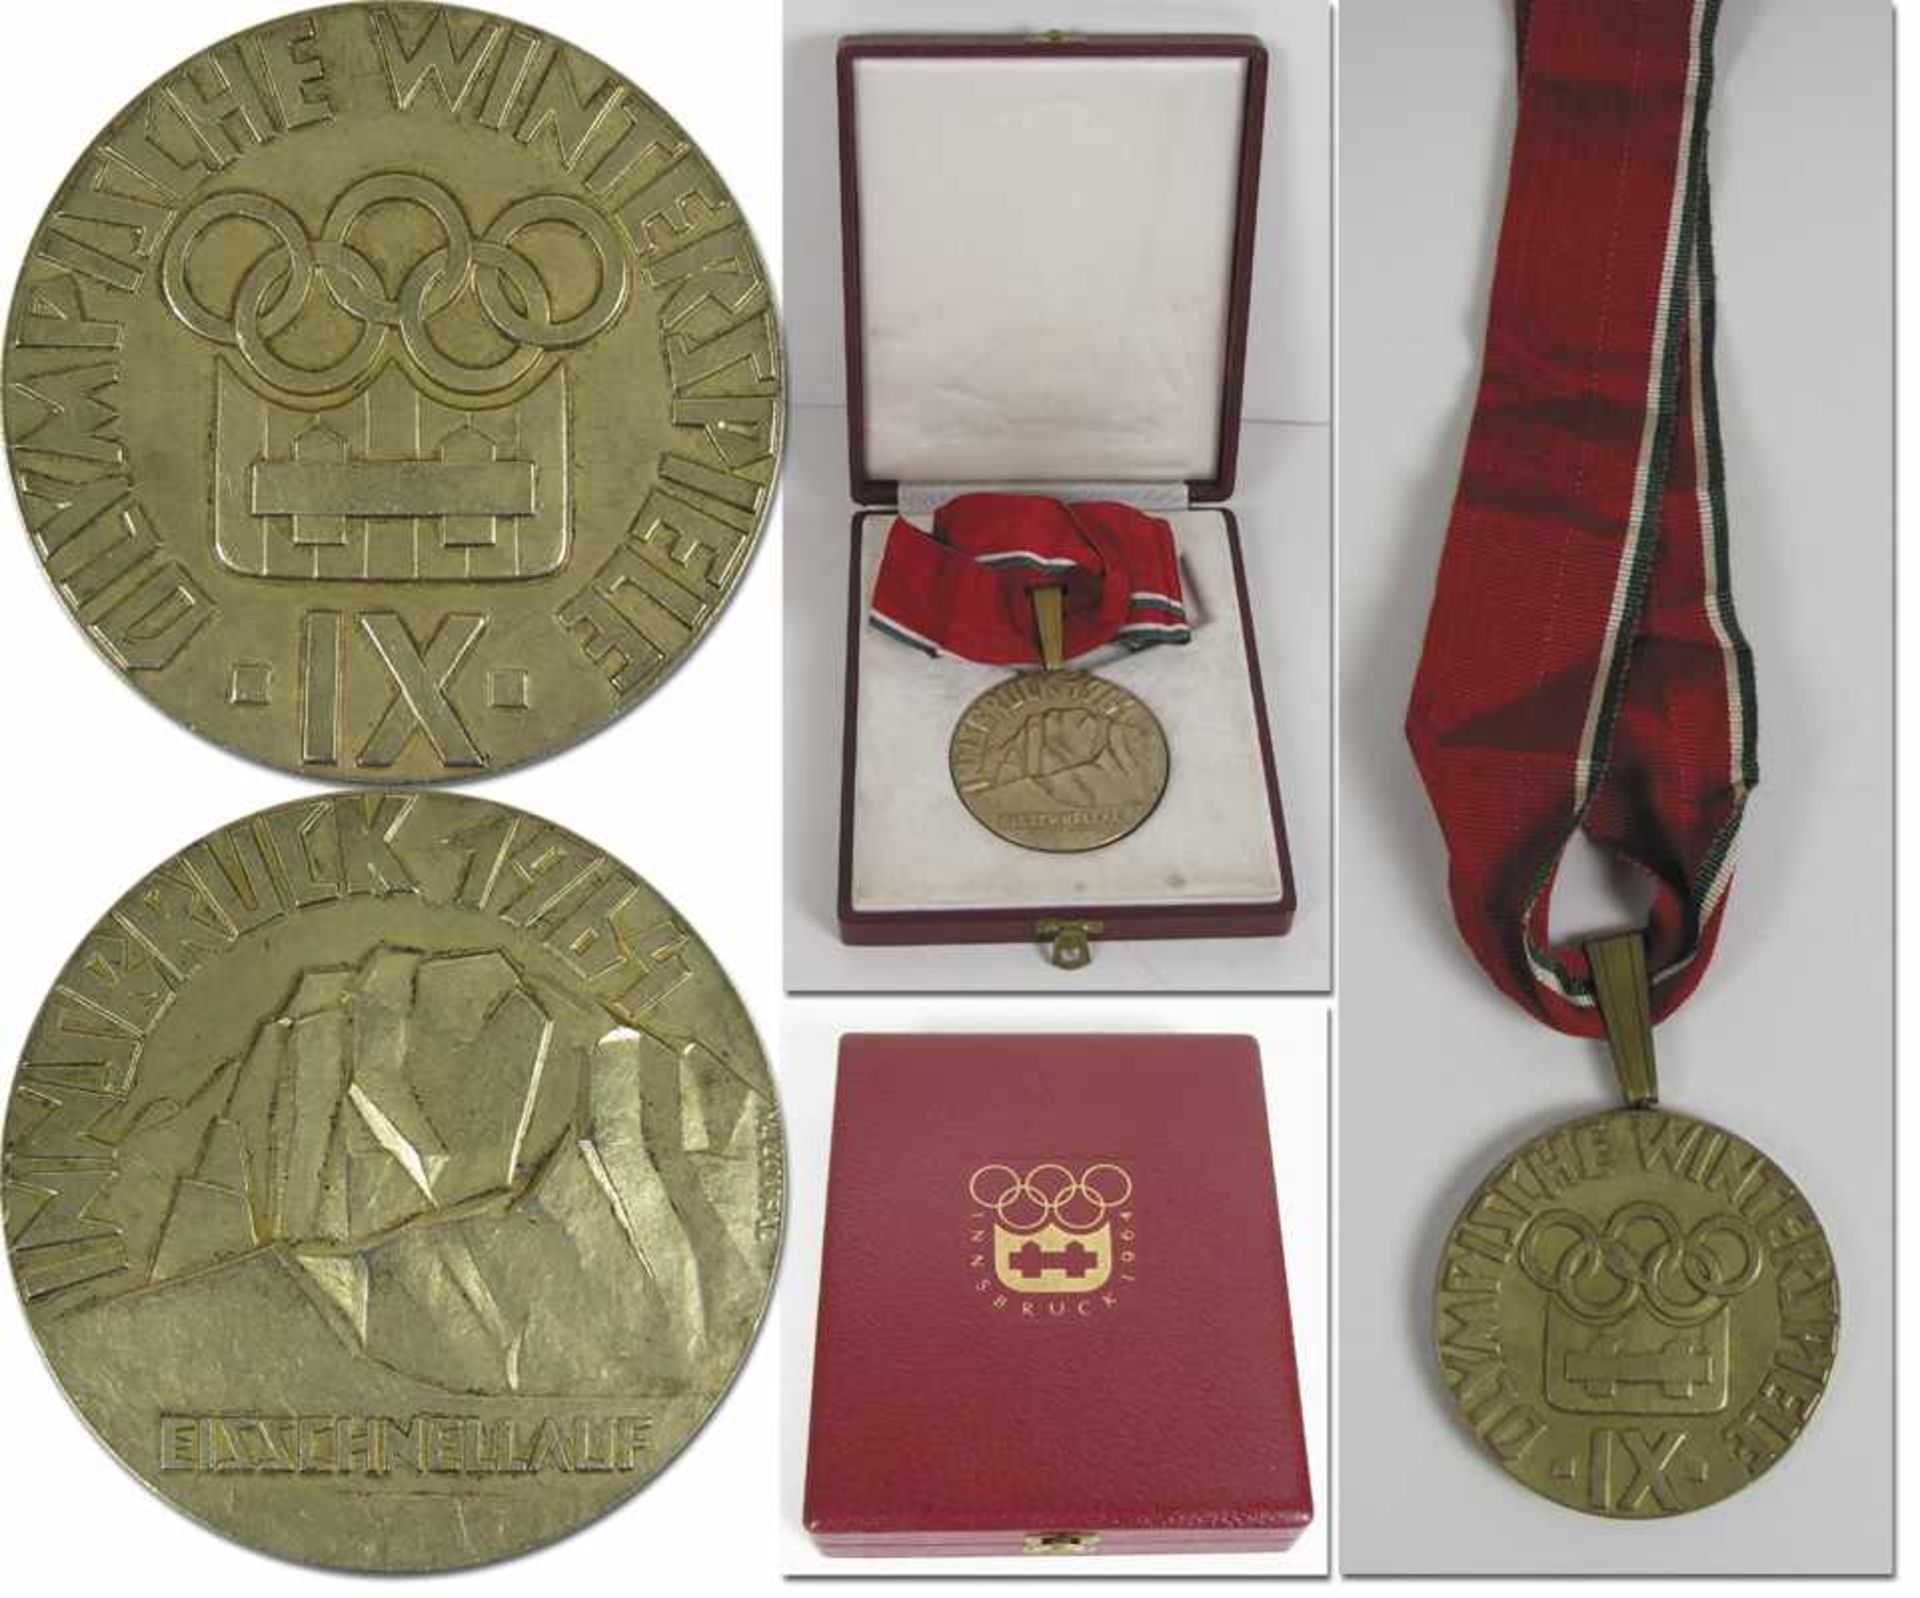 Olympic Winter Games 1964 Gold Winner medal - Gold medal for slalom at the Olympic Winter Games in